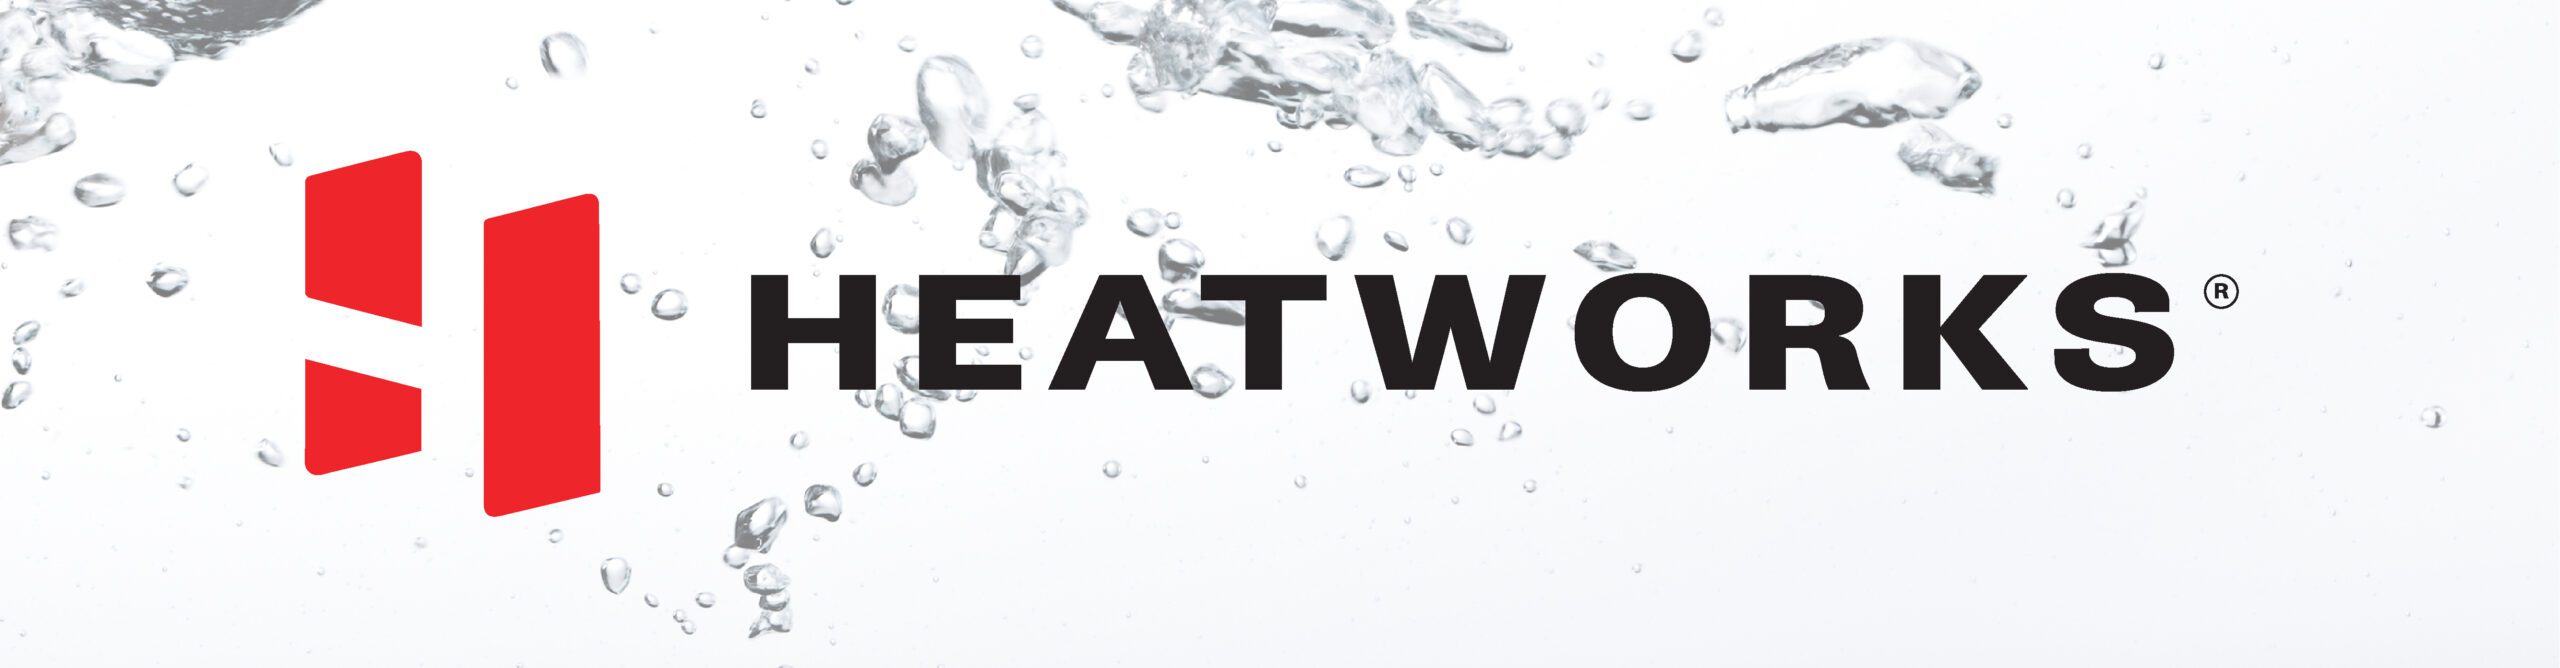 Heatworks Logo